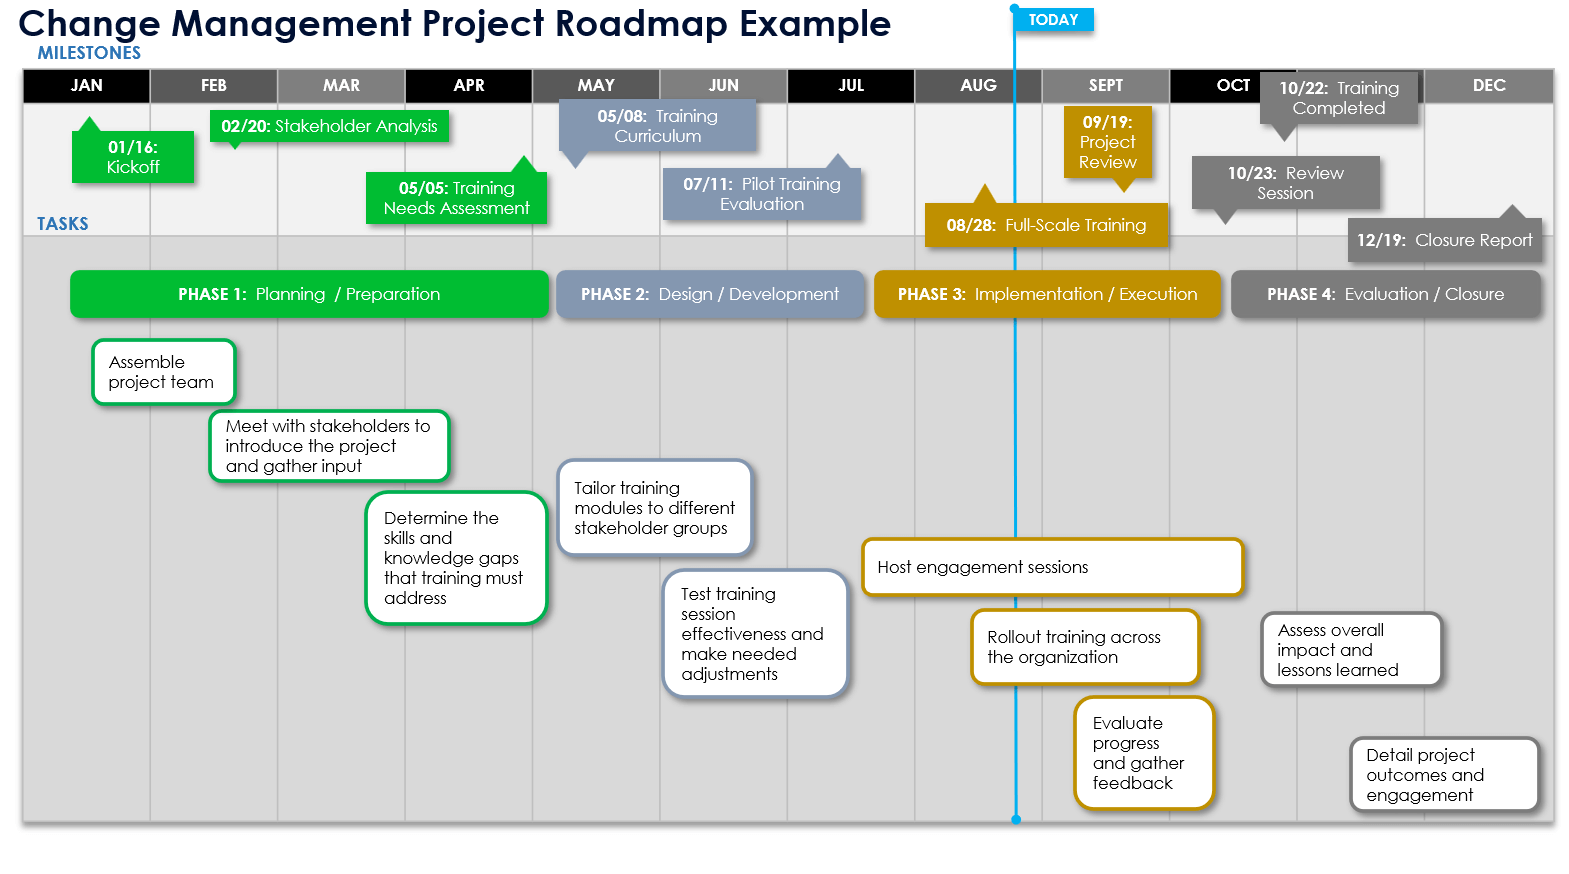 Change Management Project Roadmap Template